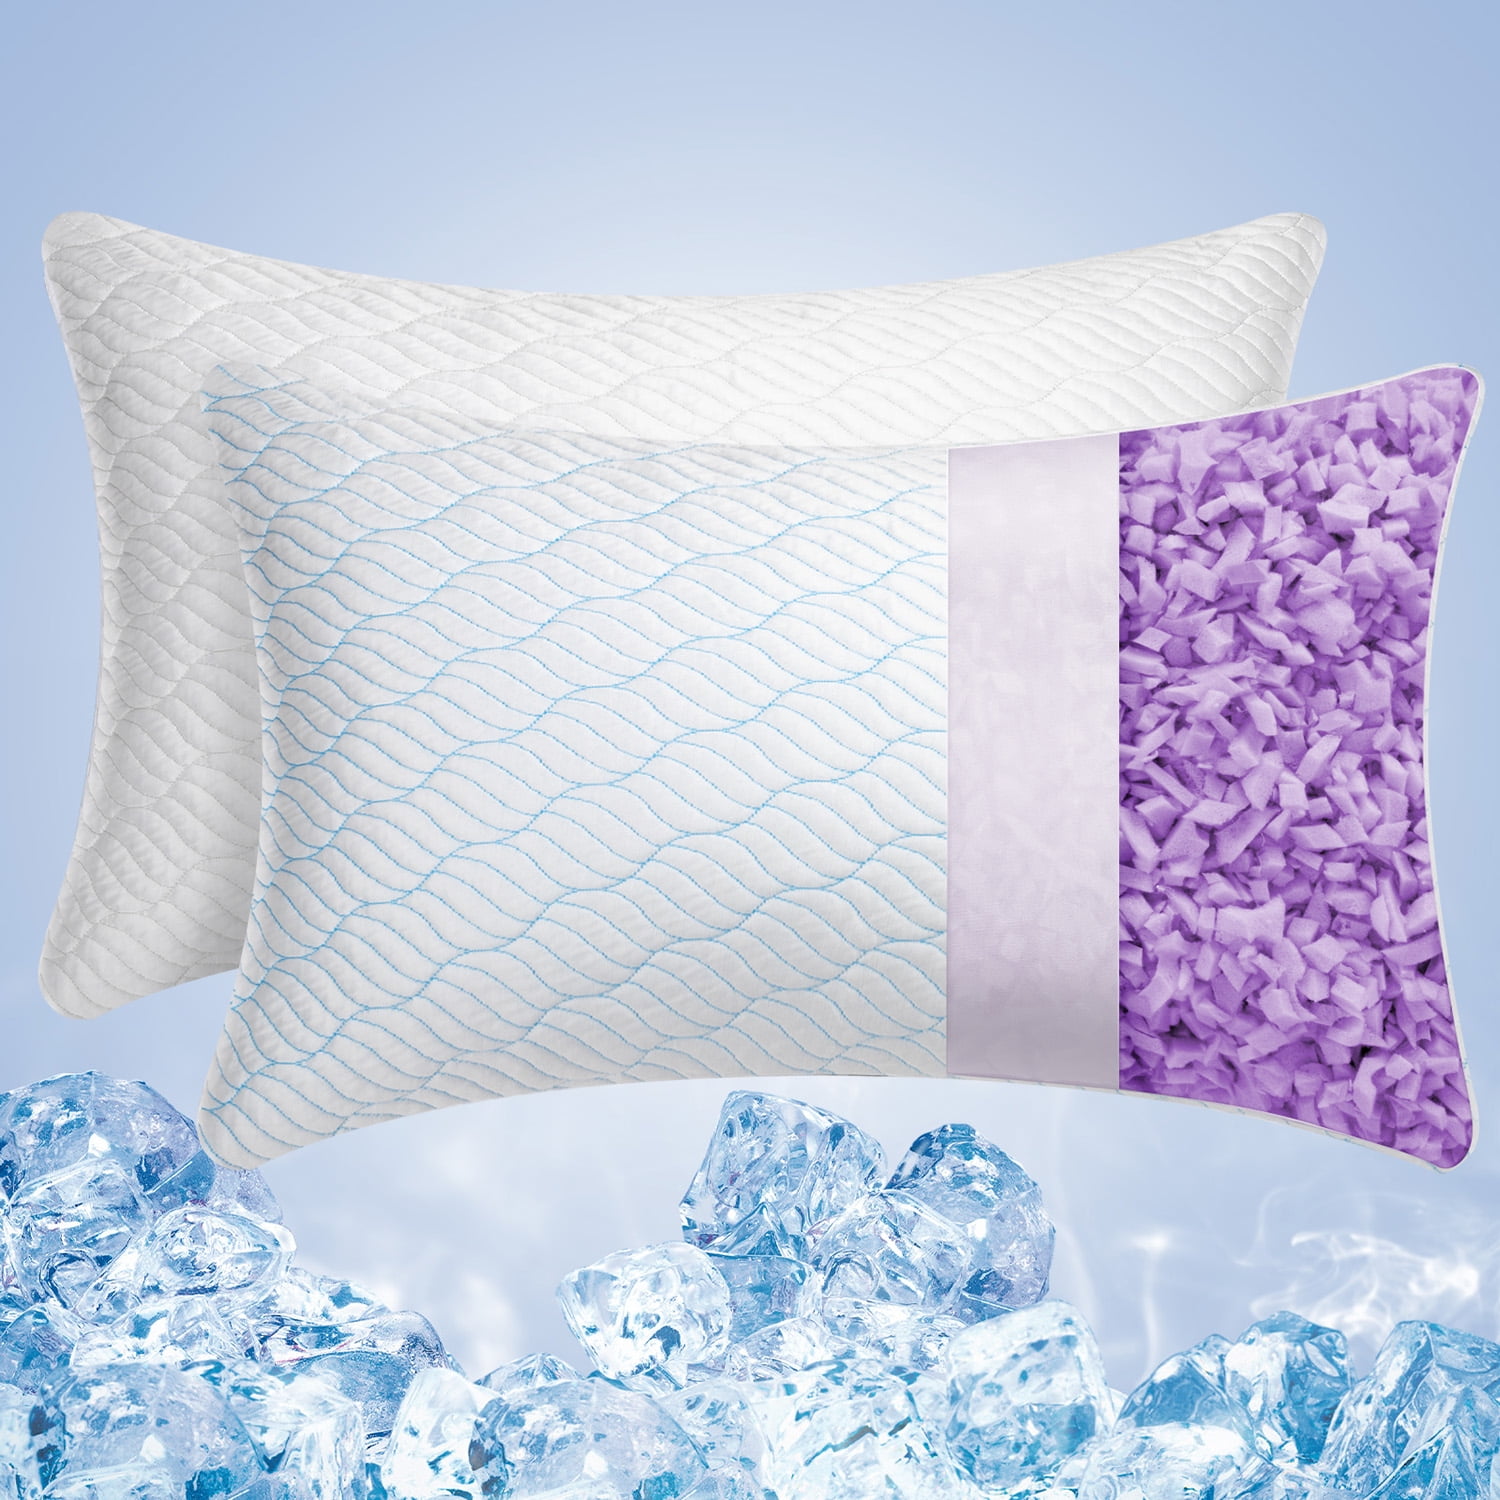 Shredded Memory Foam Pillows Bed Pillows for Sleeping Luxury Hotel